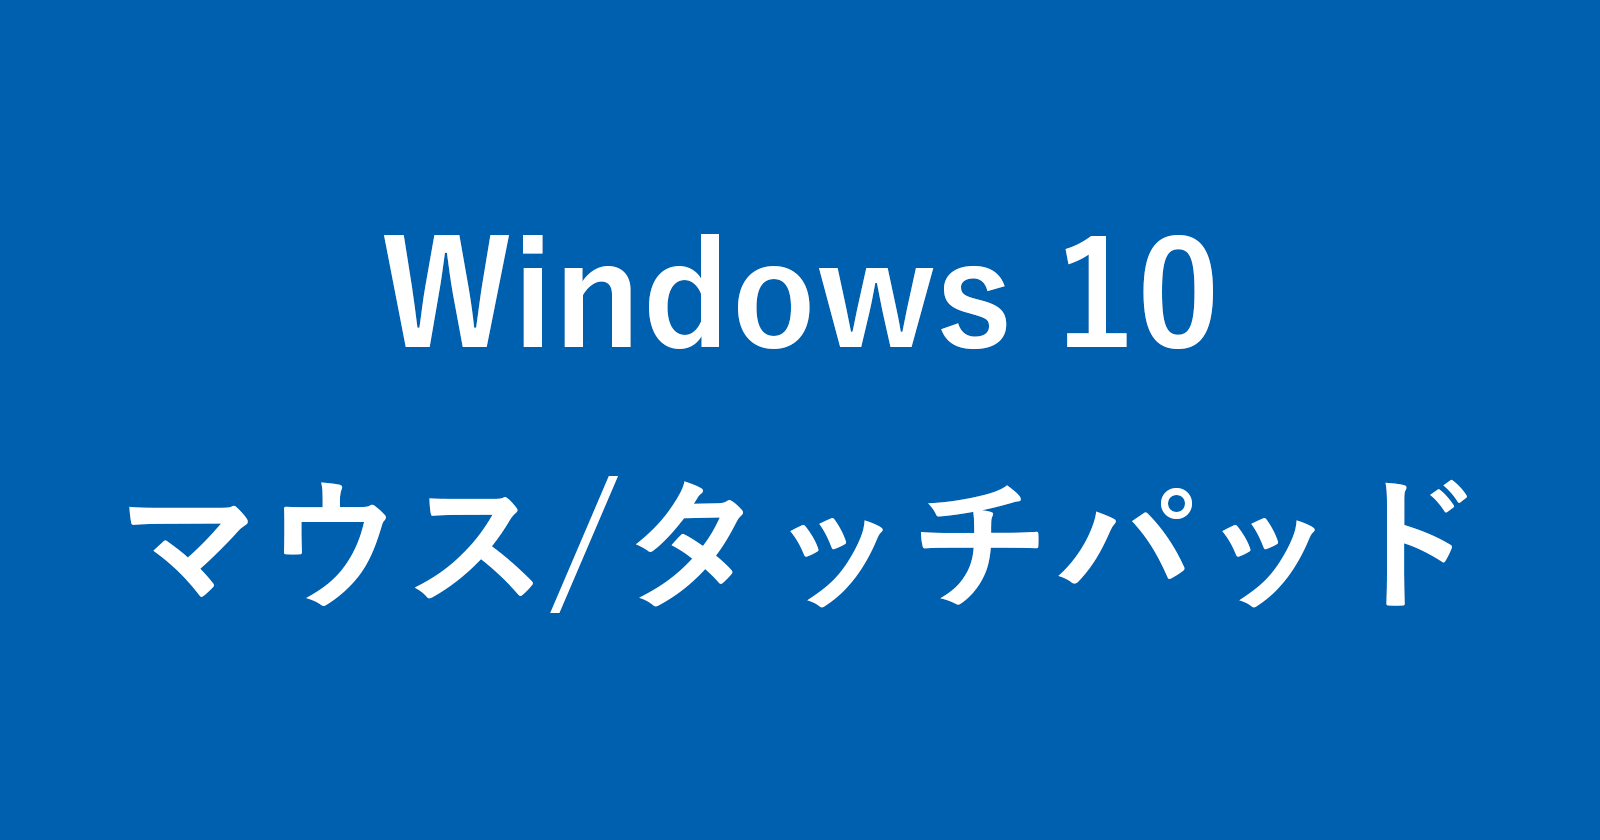 windows 10 mouse